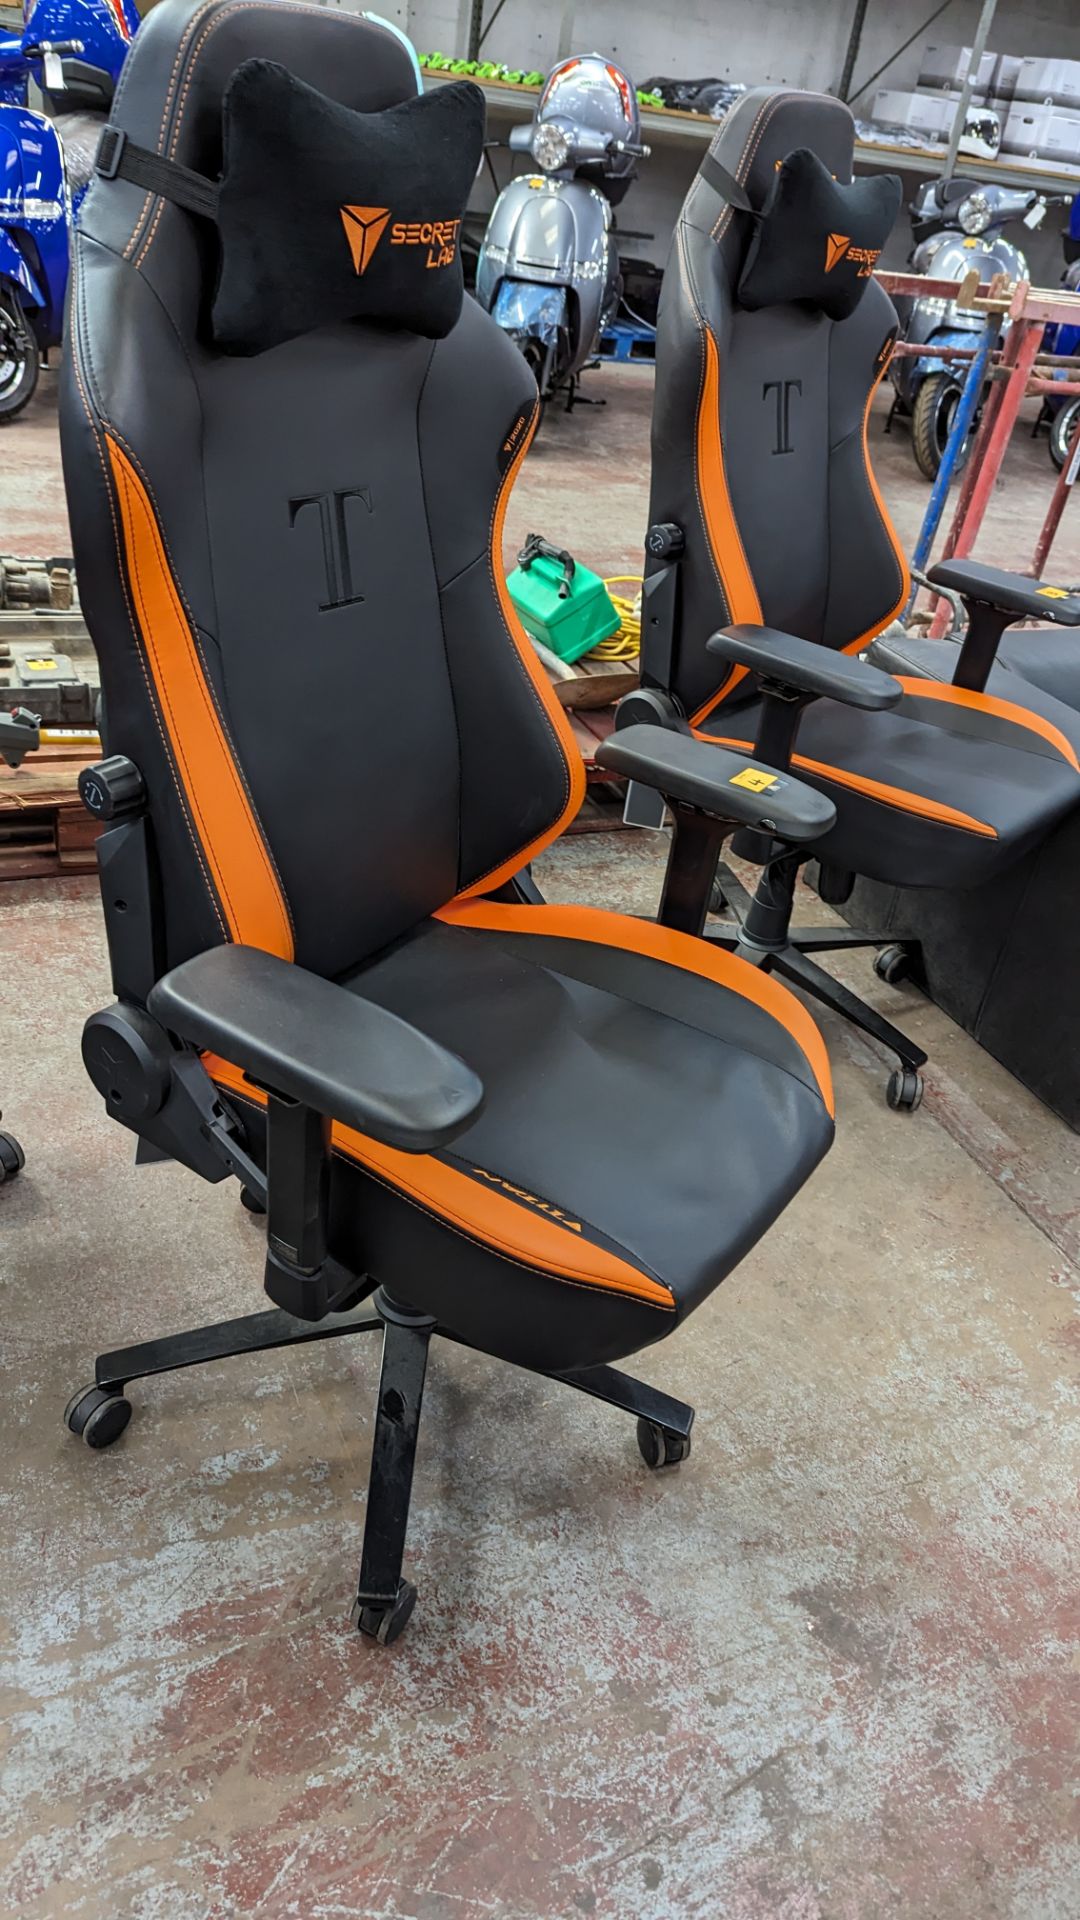 Secretlab Titan 2020 gaming chair - Image 4 of 13